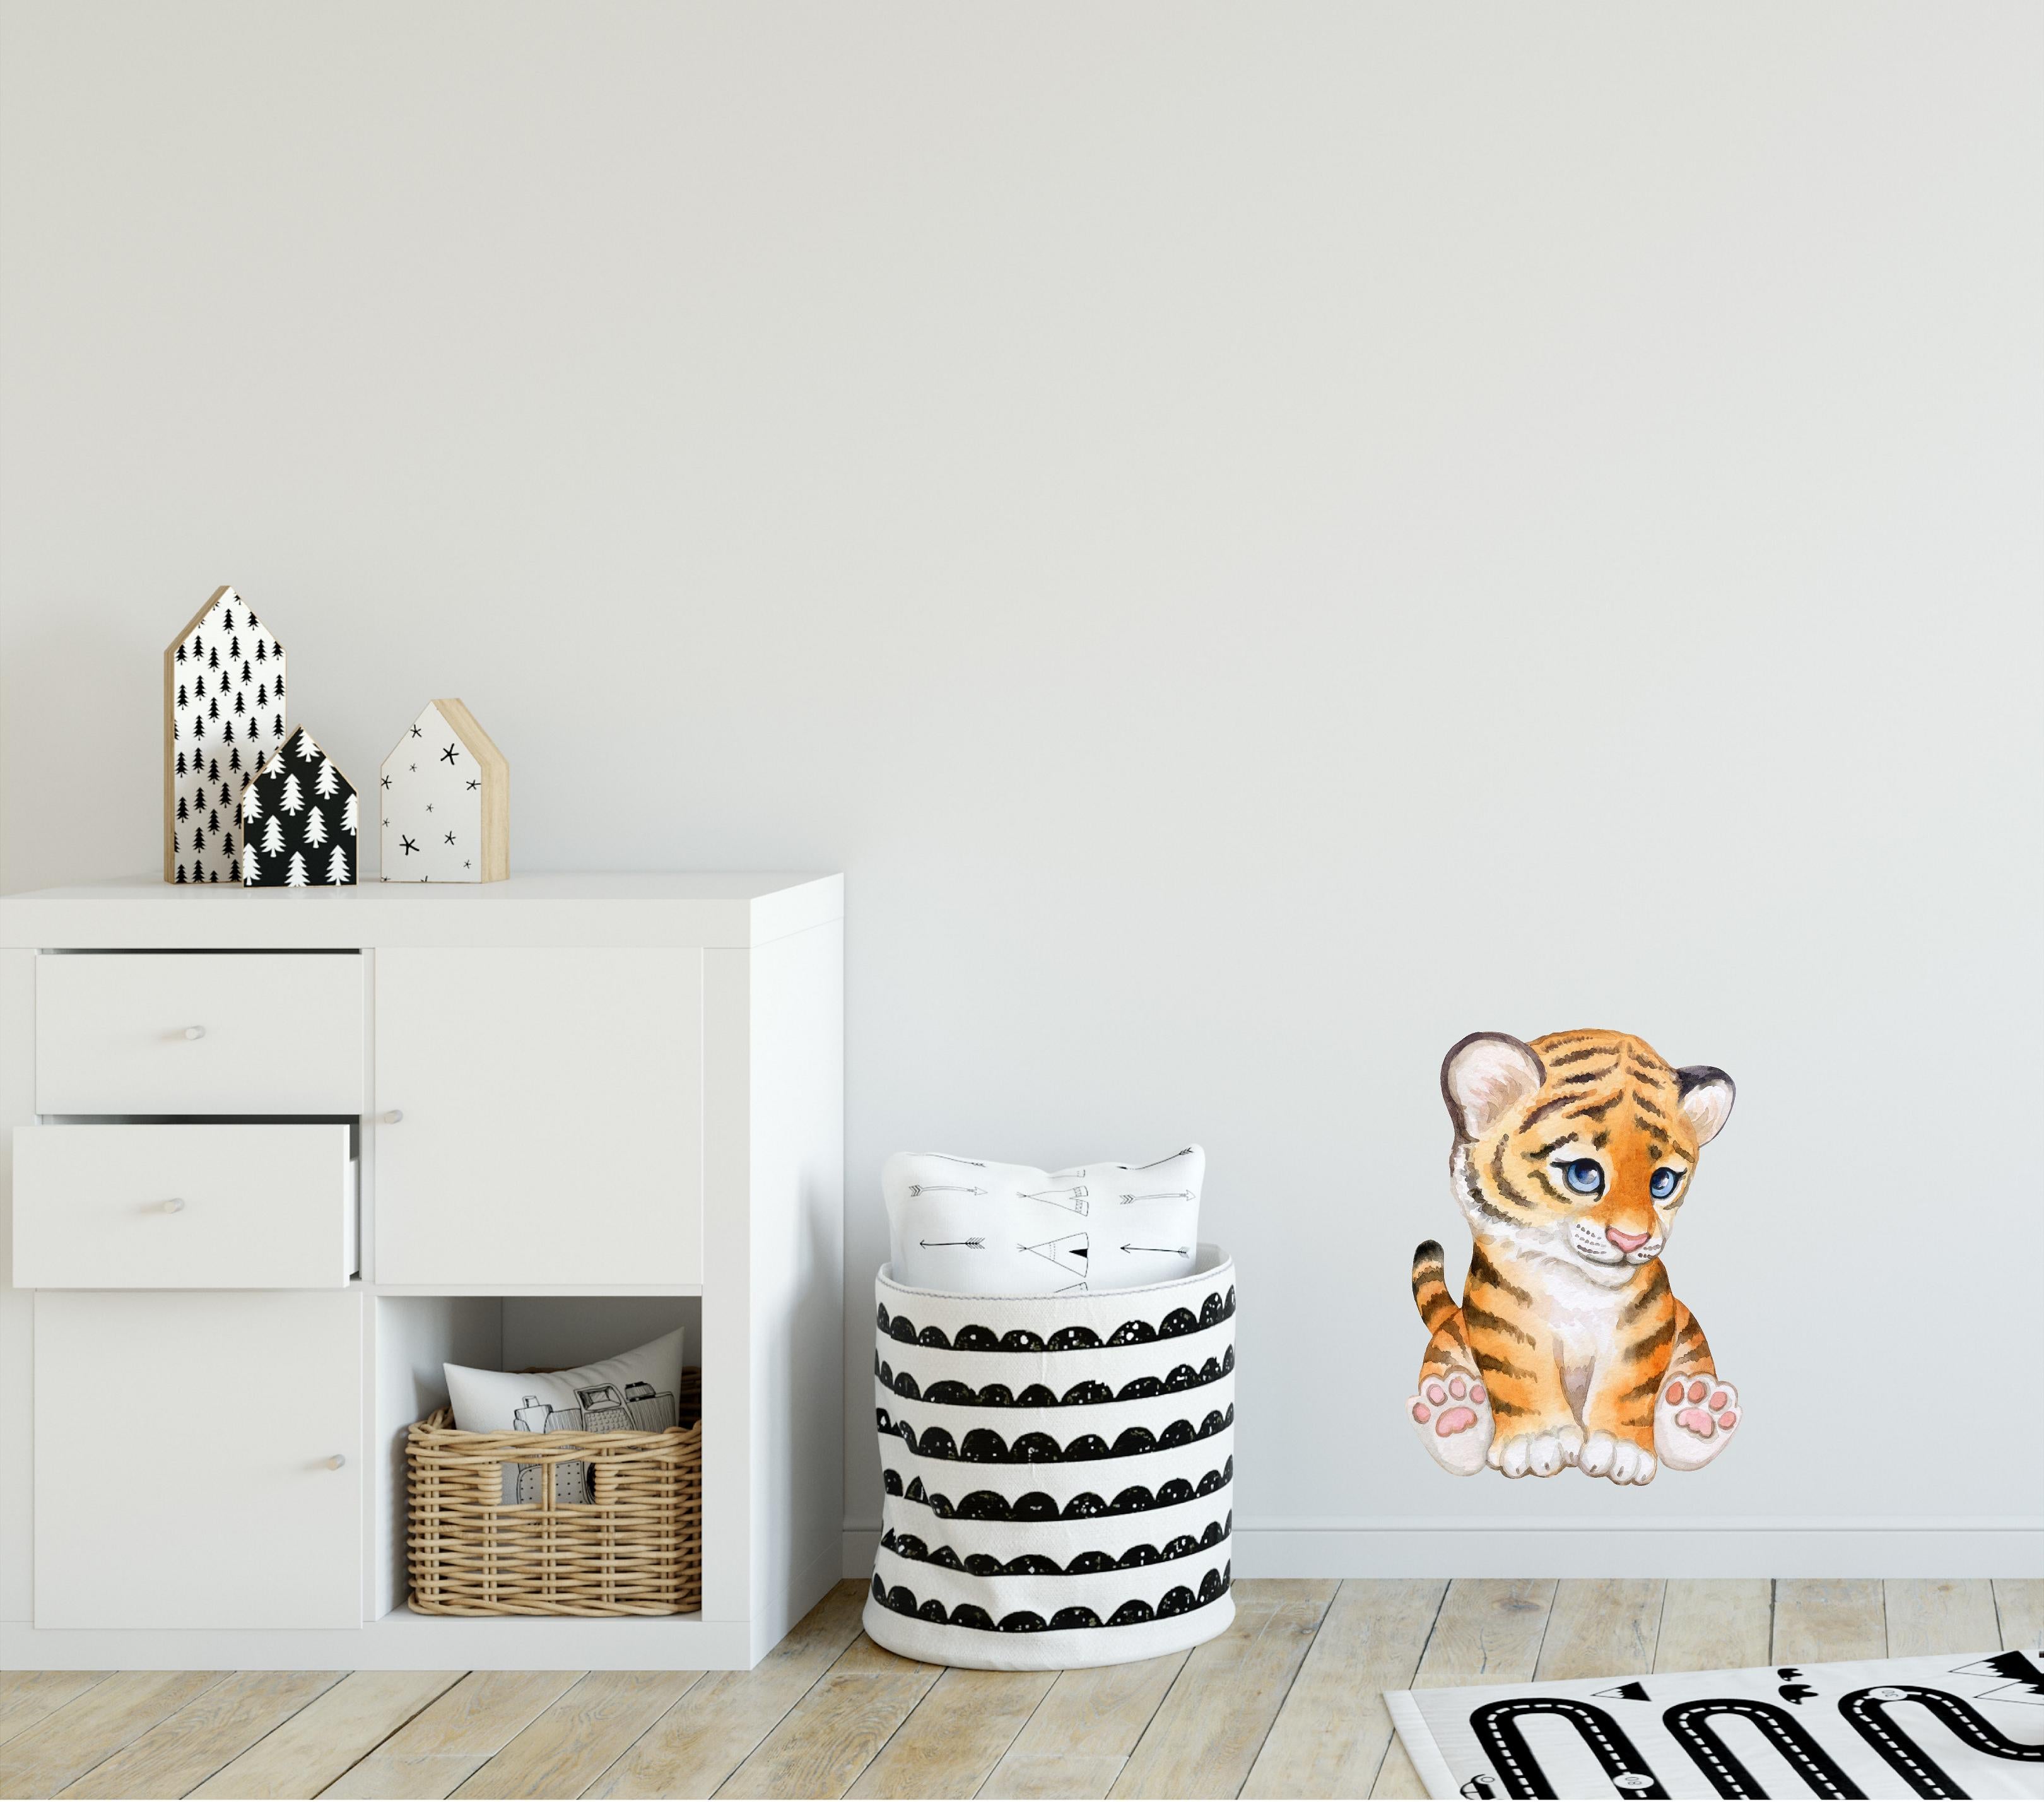 Baby Tiger Cub #4 Wall Decal Safari Animal Wall Sticker Removable Fabric Vinyl | DecalBaby